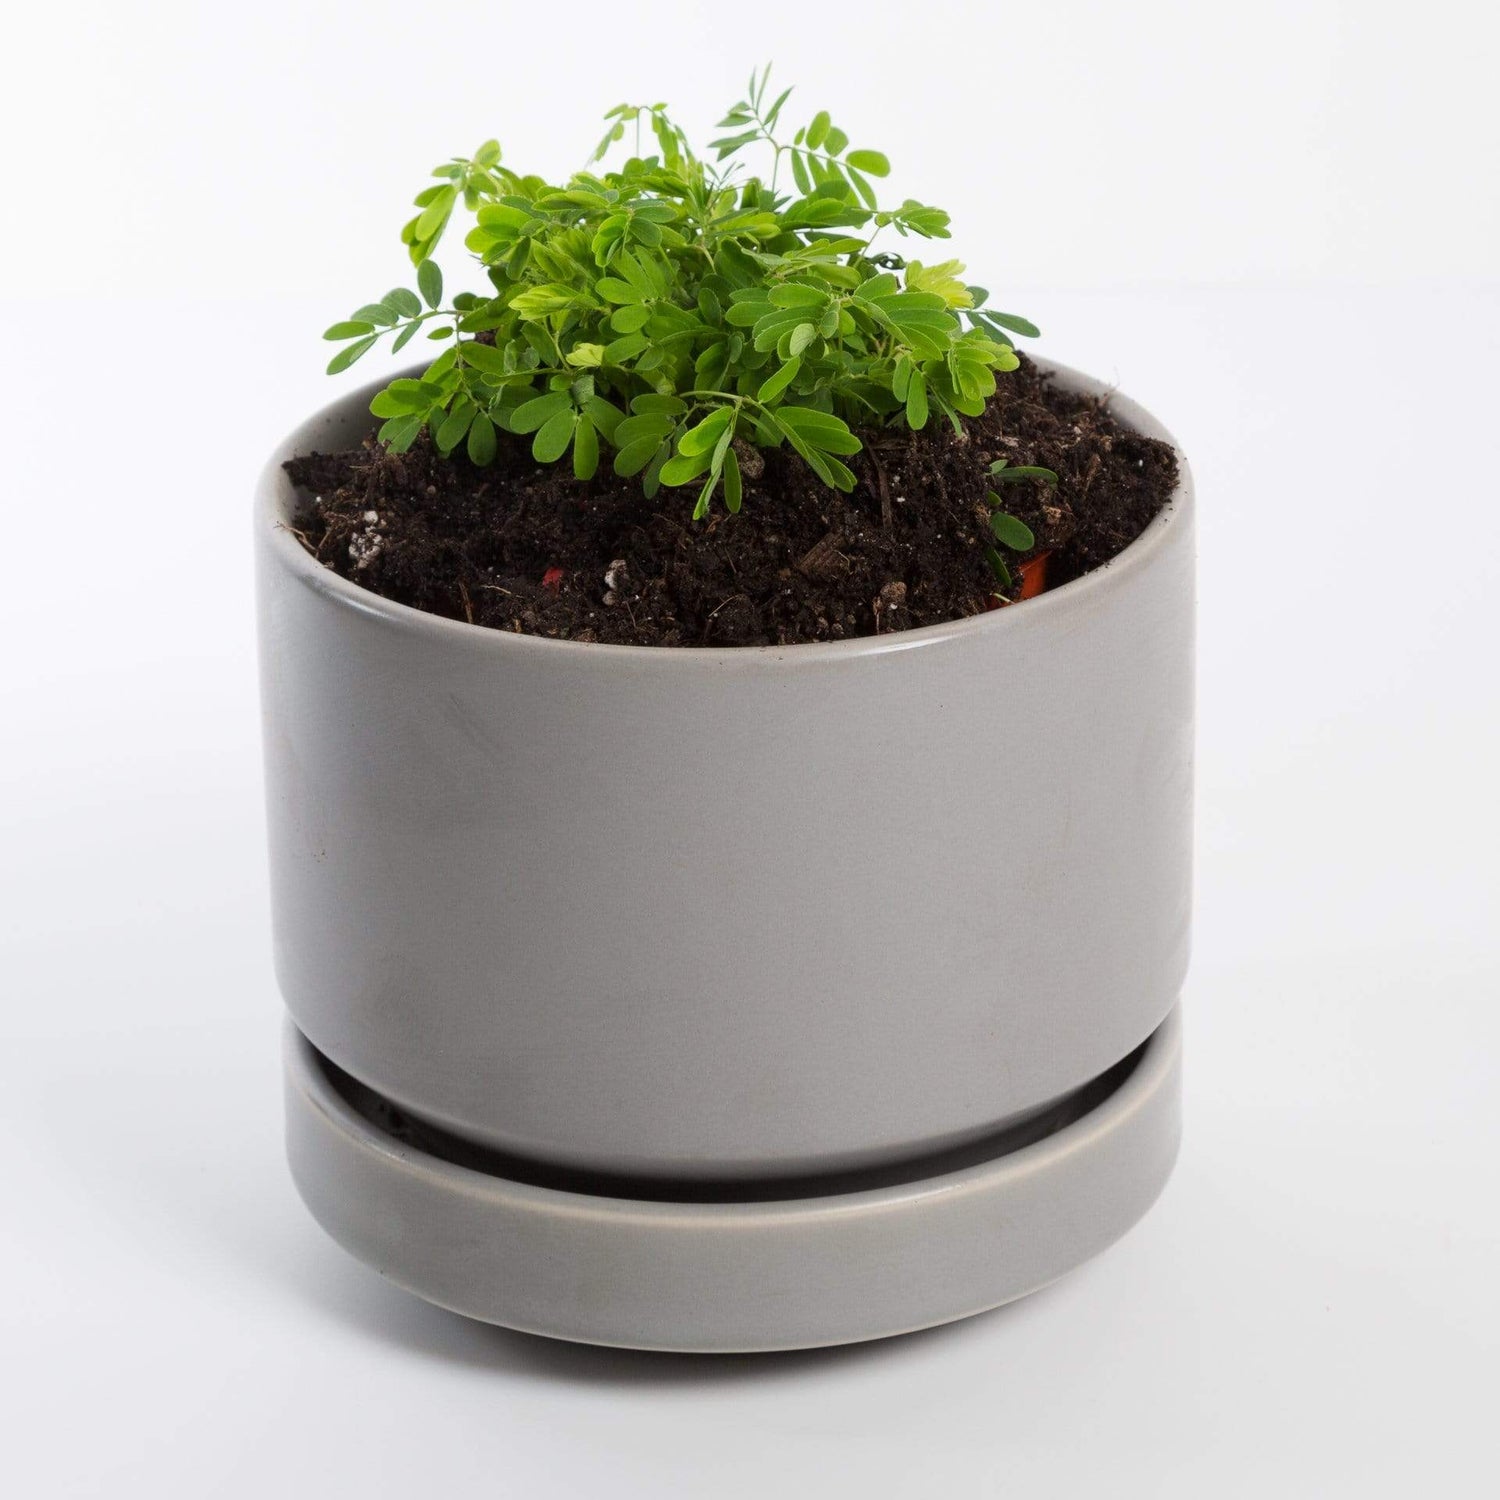 Urban Sprouts Plant 4" in nursery pot Sensitive Plant